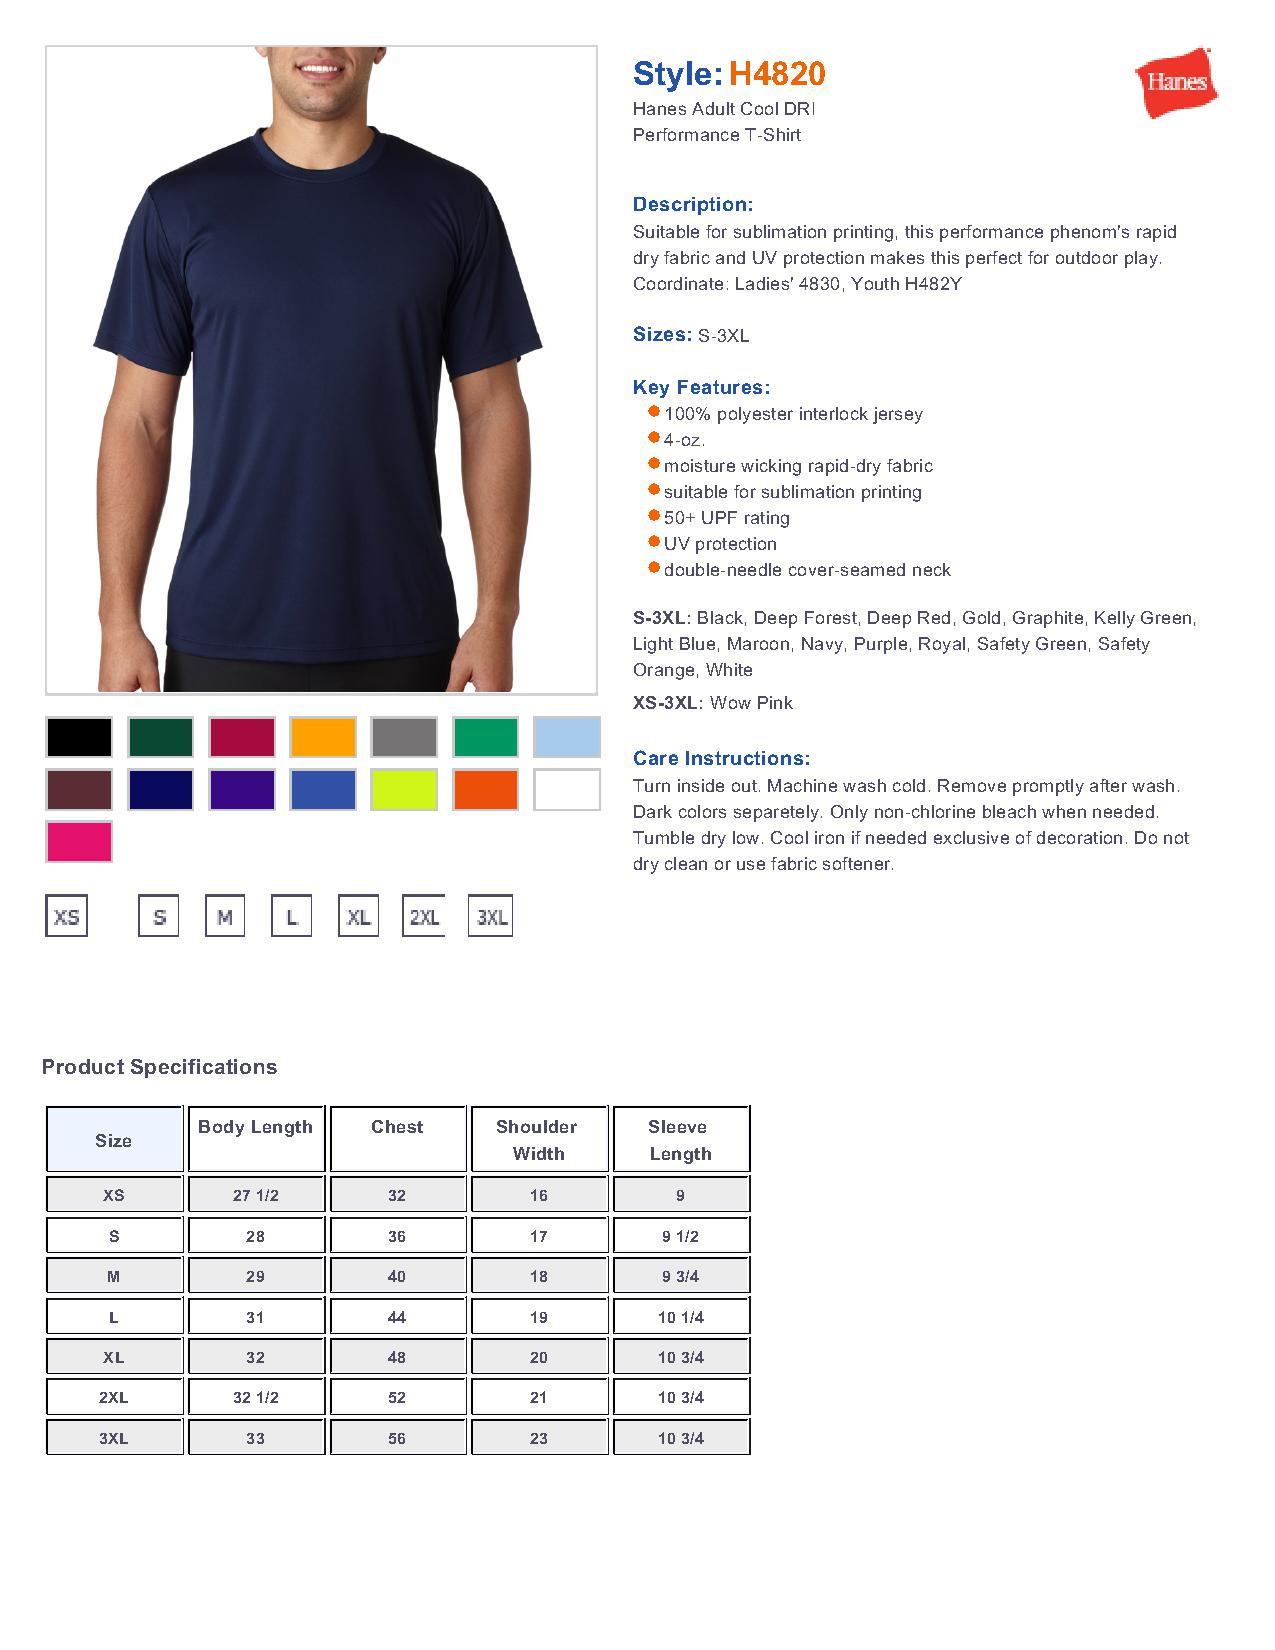 Hanes H4820 - Adult Cool DRI Performance T-Shirt $6.13 - Men's T-Shirts